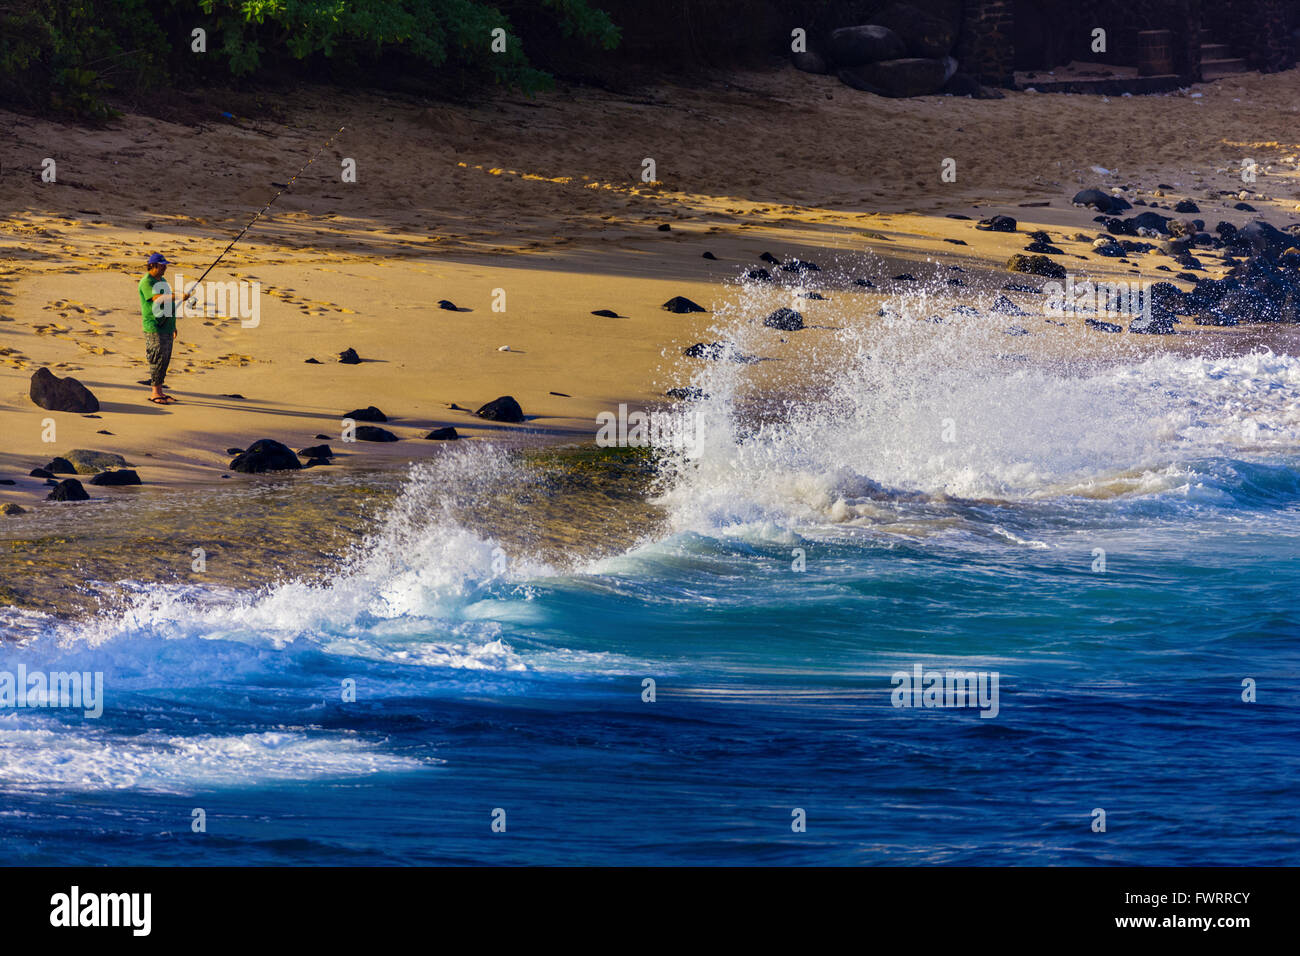 man fishing with rod off sandy beach Maui Hawaii Stock Photo